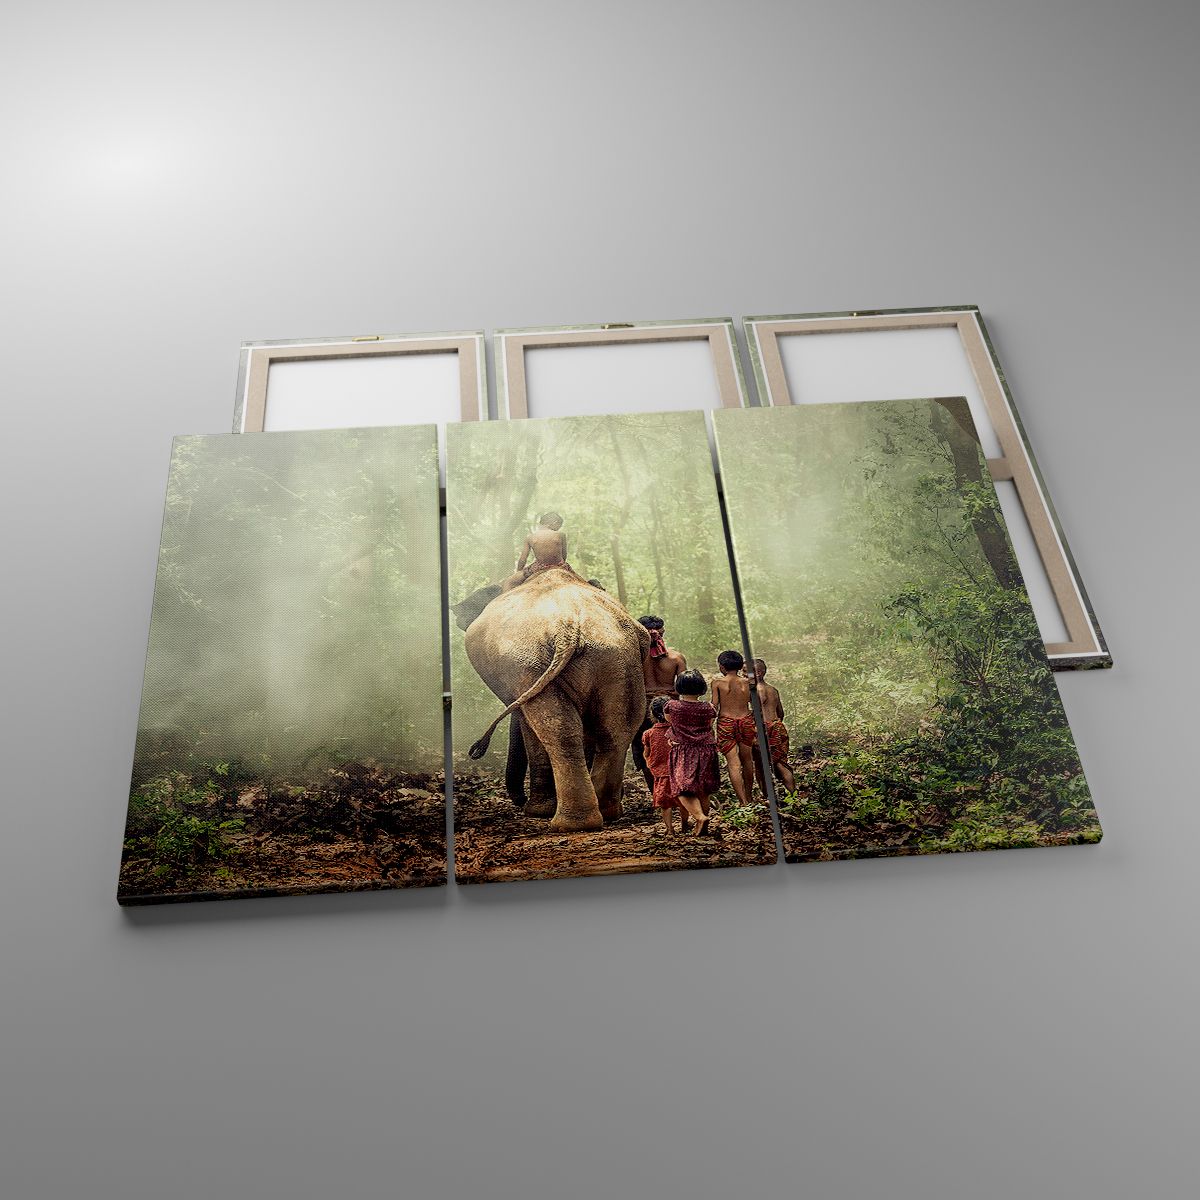 Leinwandbild Landschaft, Leinwandbild Elefant, Leinwandbild Urwald, Leinwandbild Asien, Leinwandbild Thailand